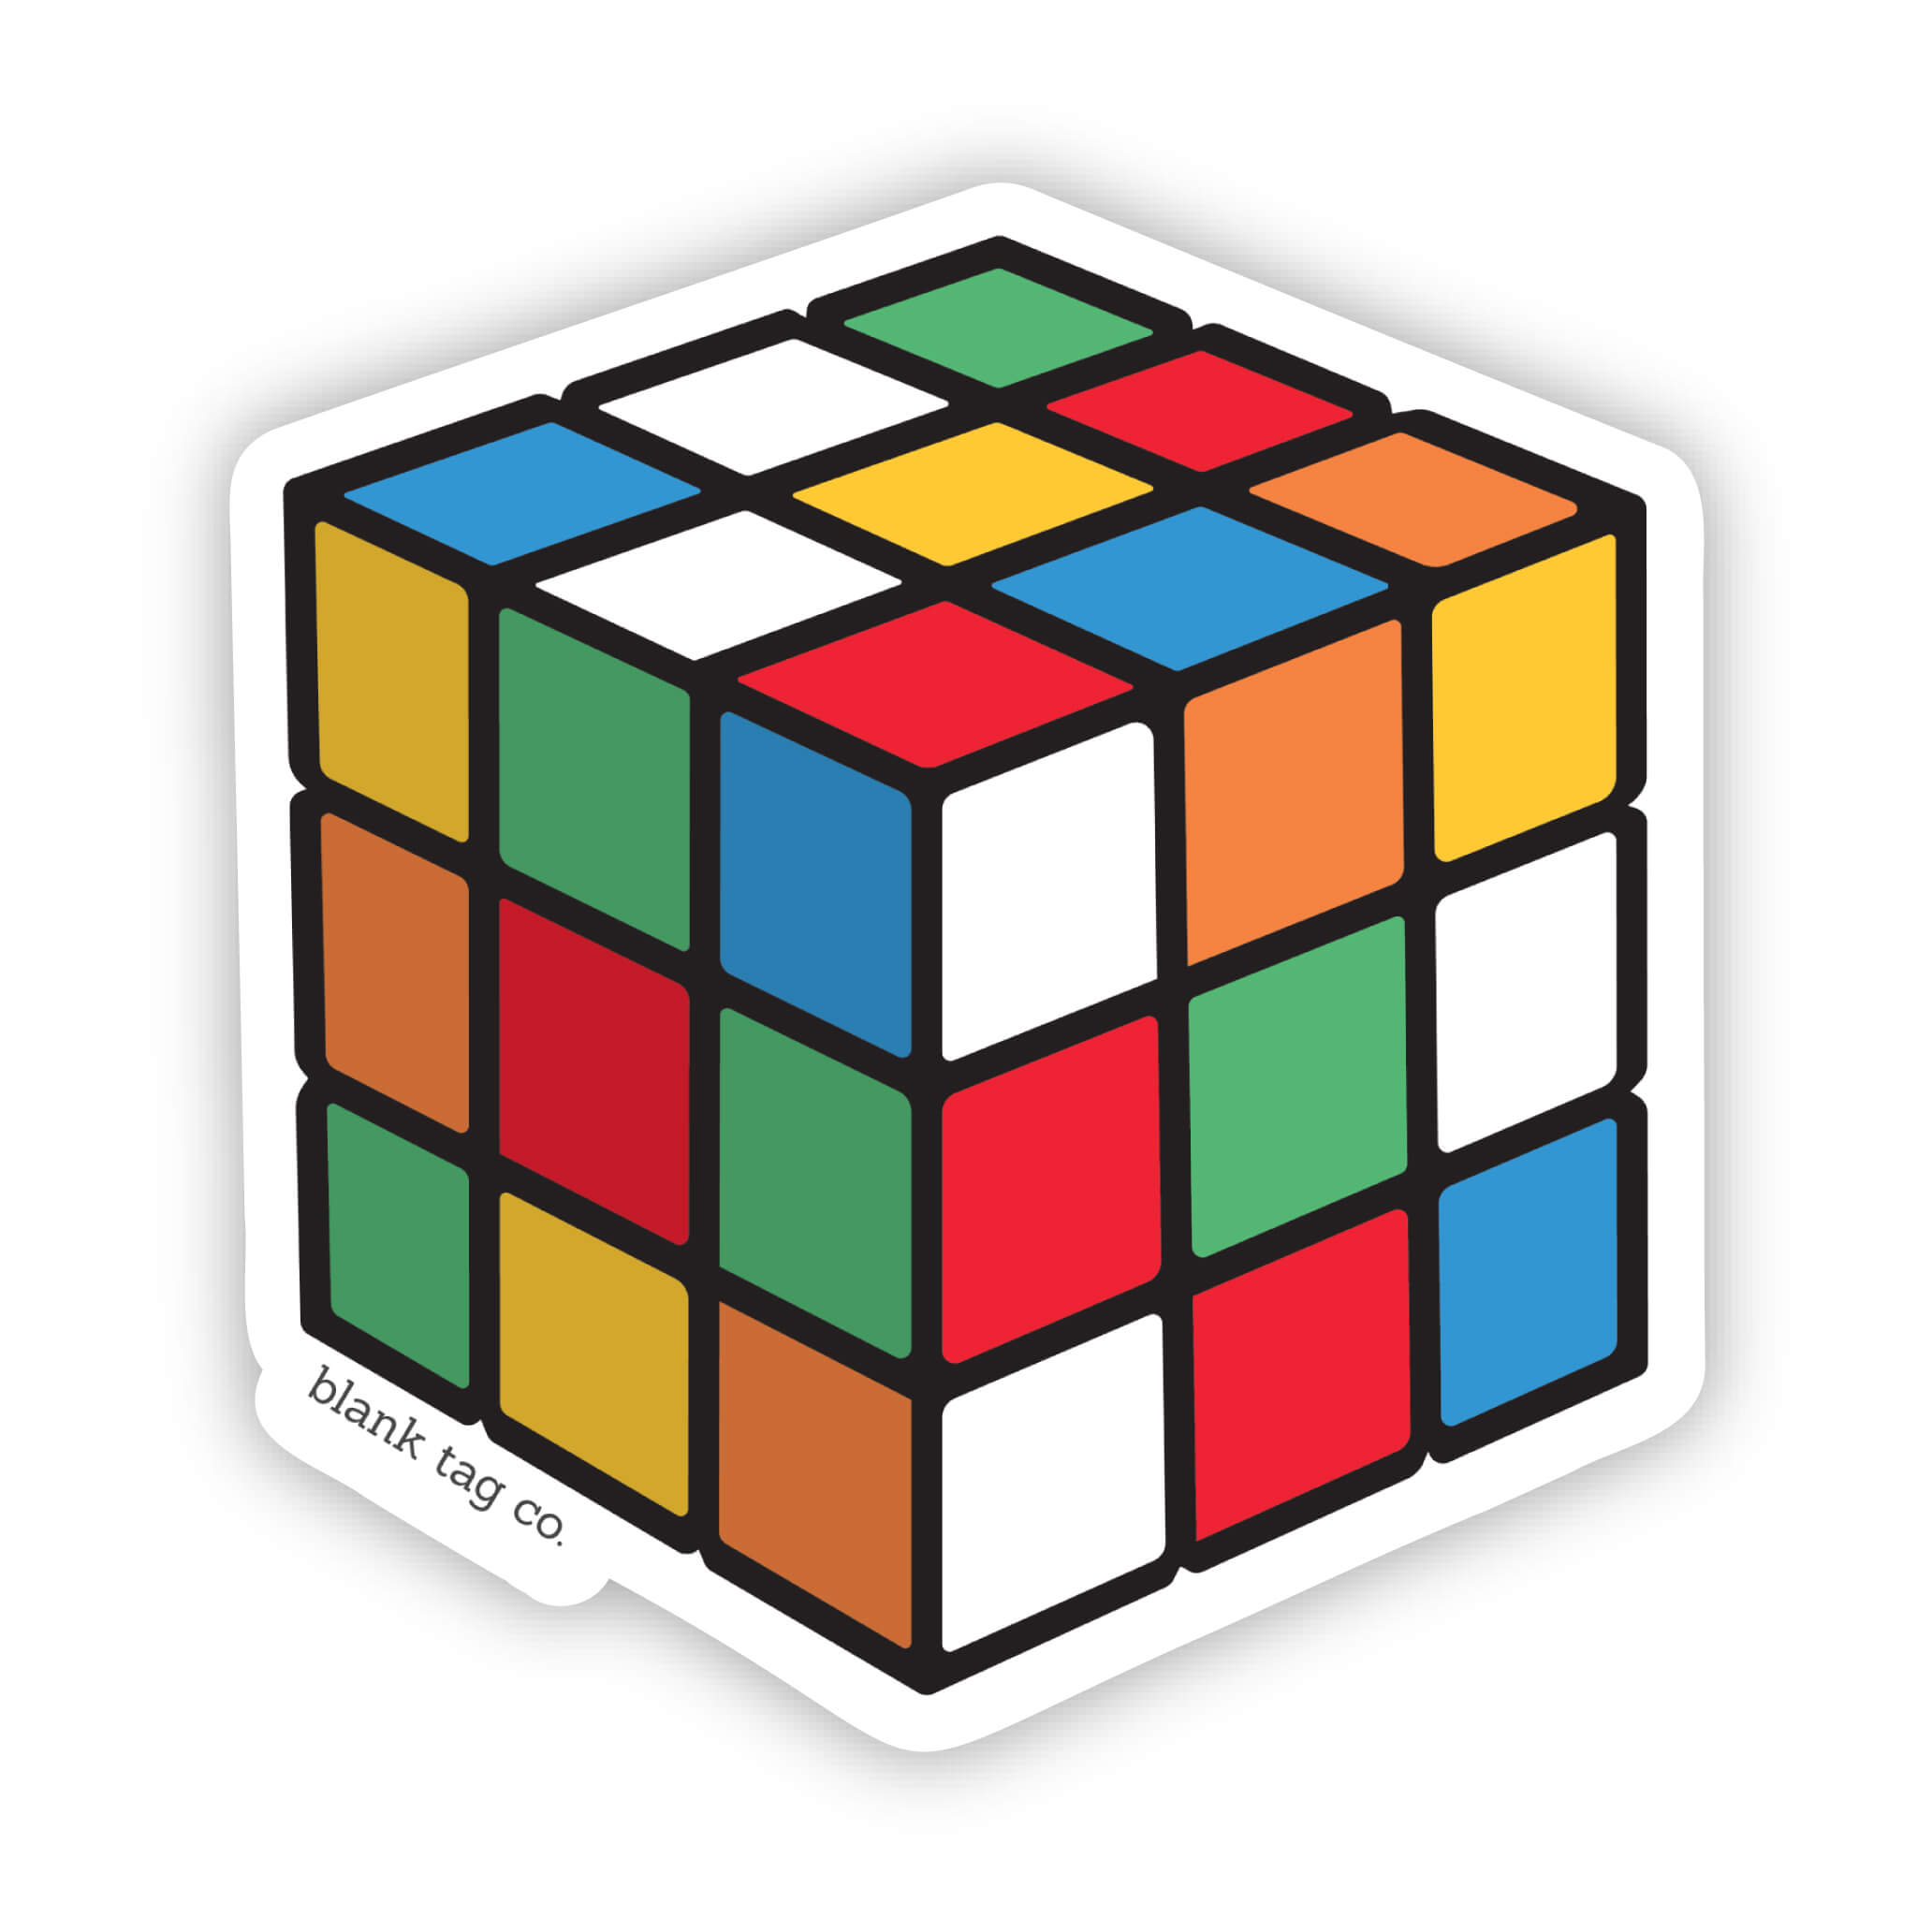 The Rubix Cube Sticker